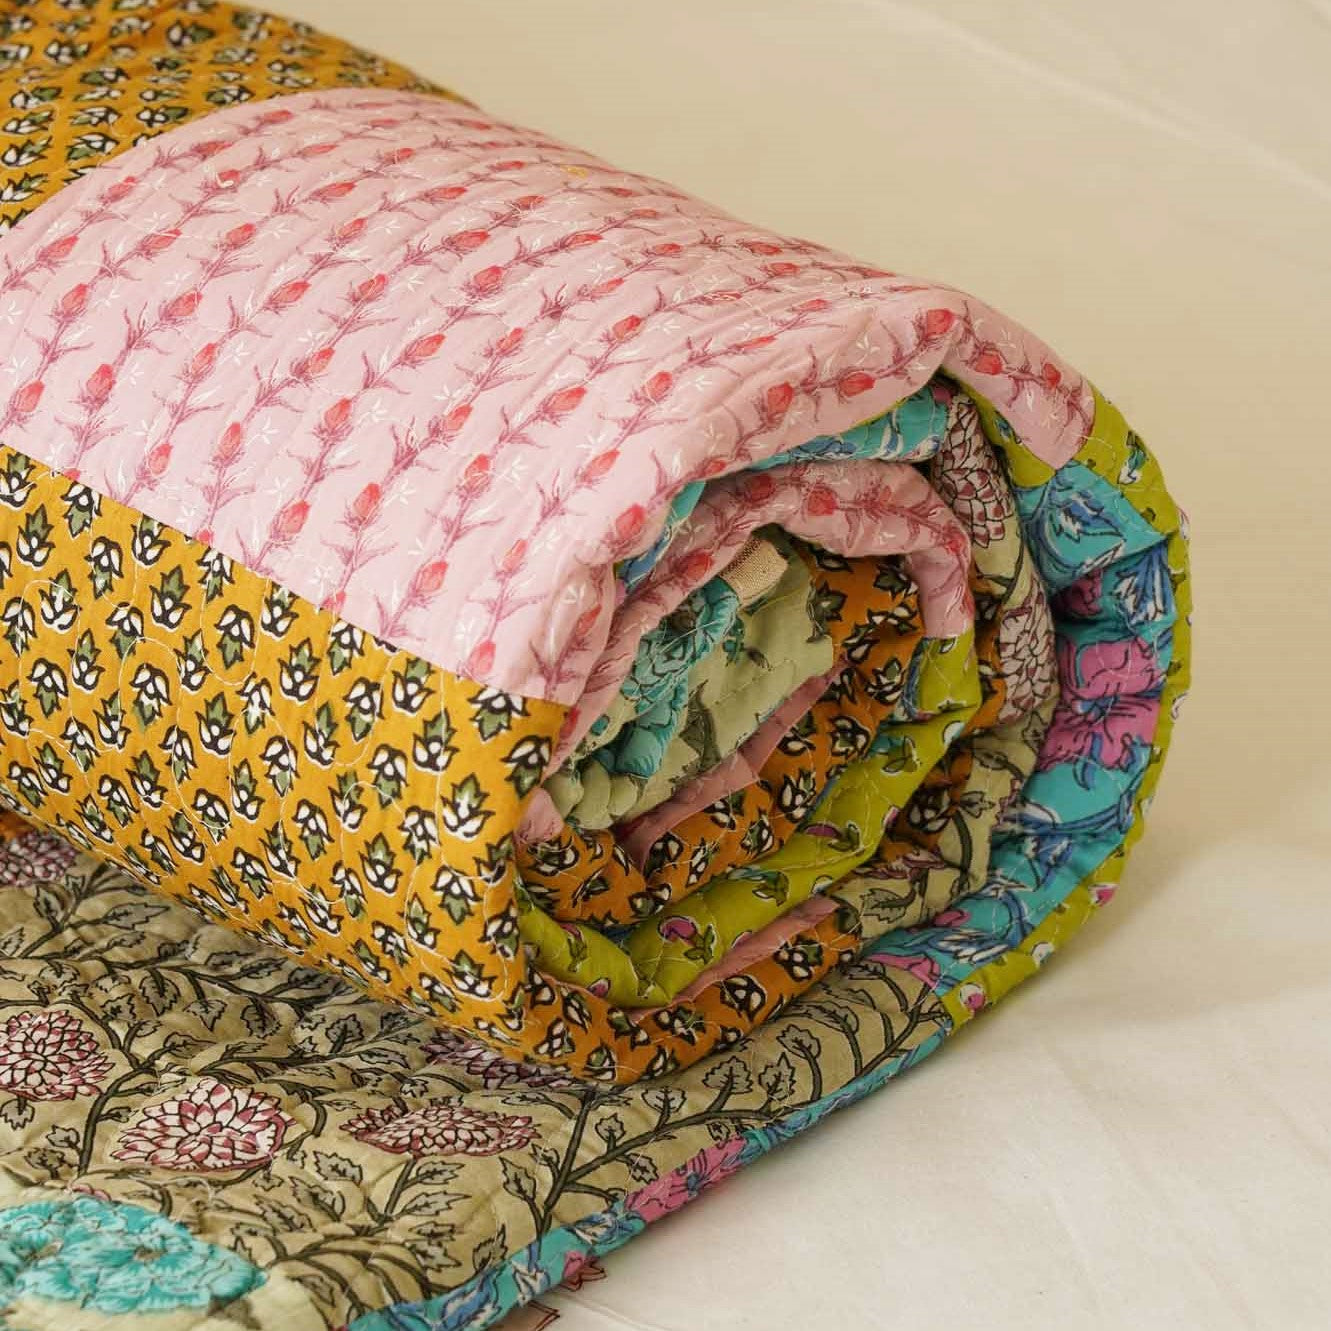 Rangeela - A Patchwork Reversible Quilted Bedcover/Comforter